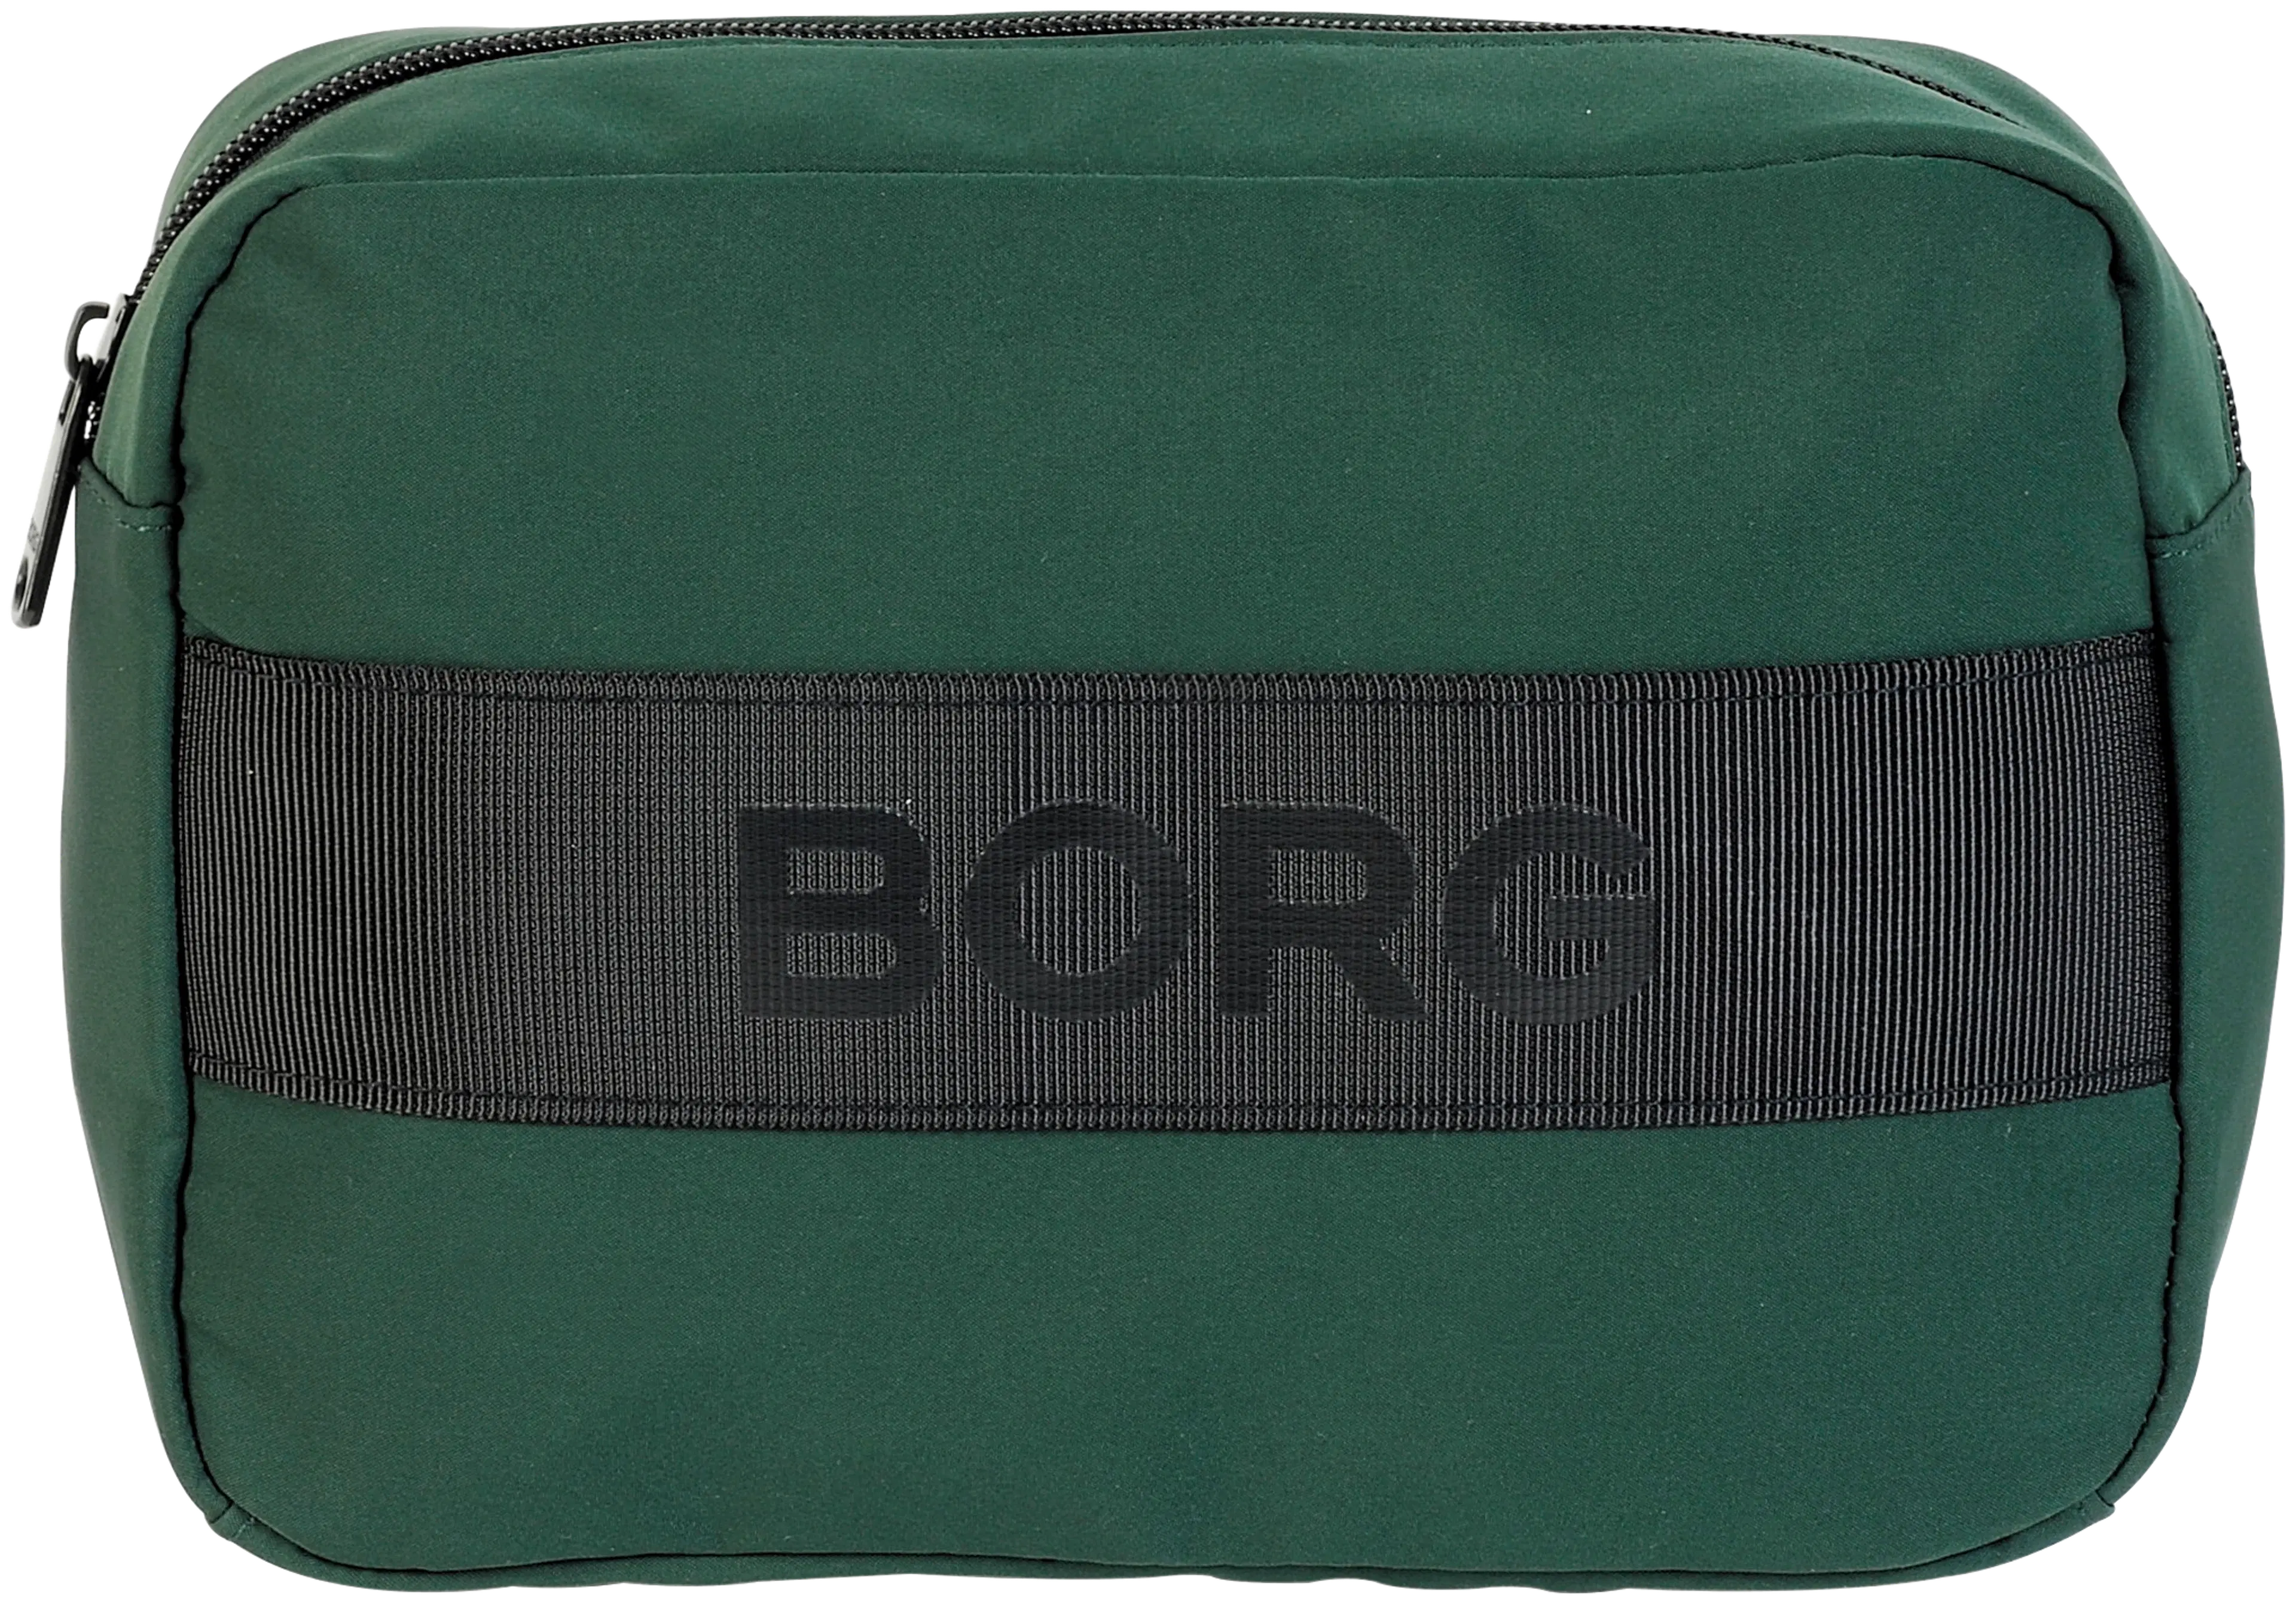 Björn Borg Classic toilettipussi, vihreä